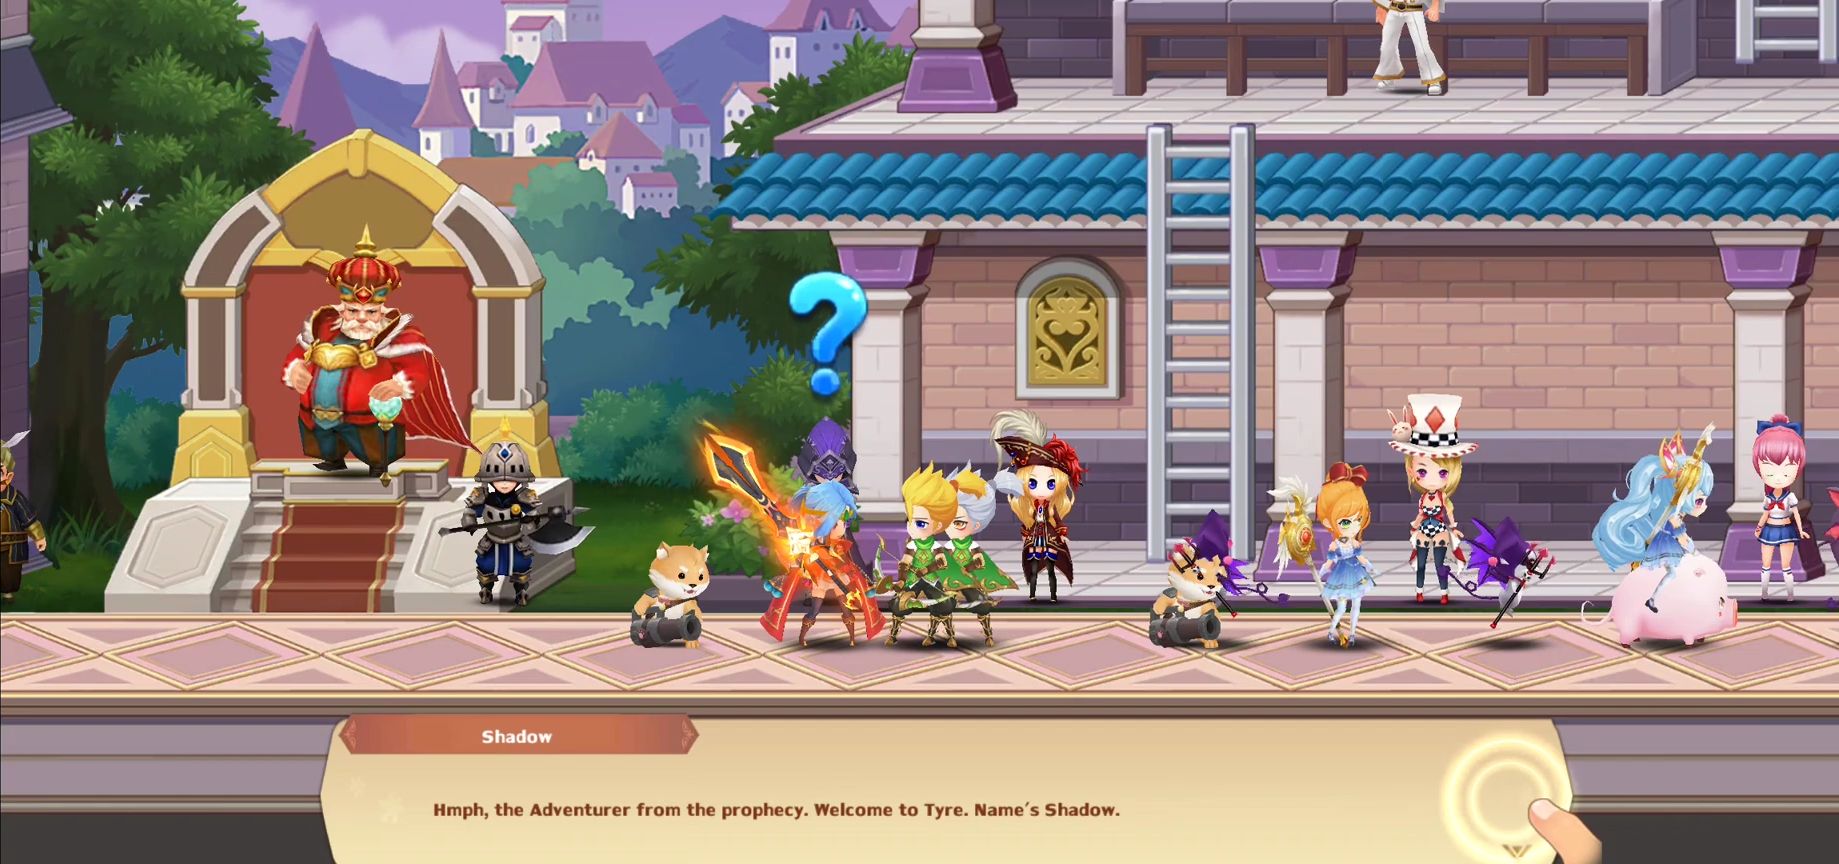 Rainbow Story Global - Android game screenshots.